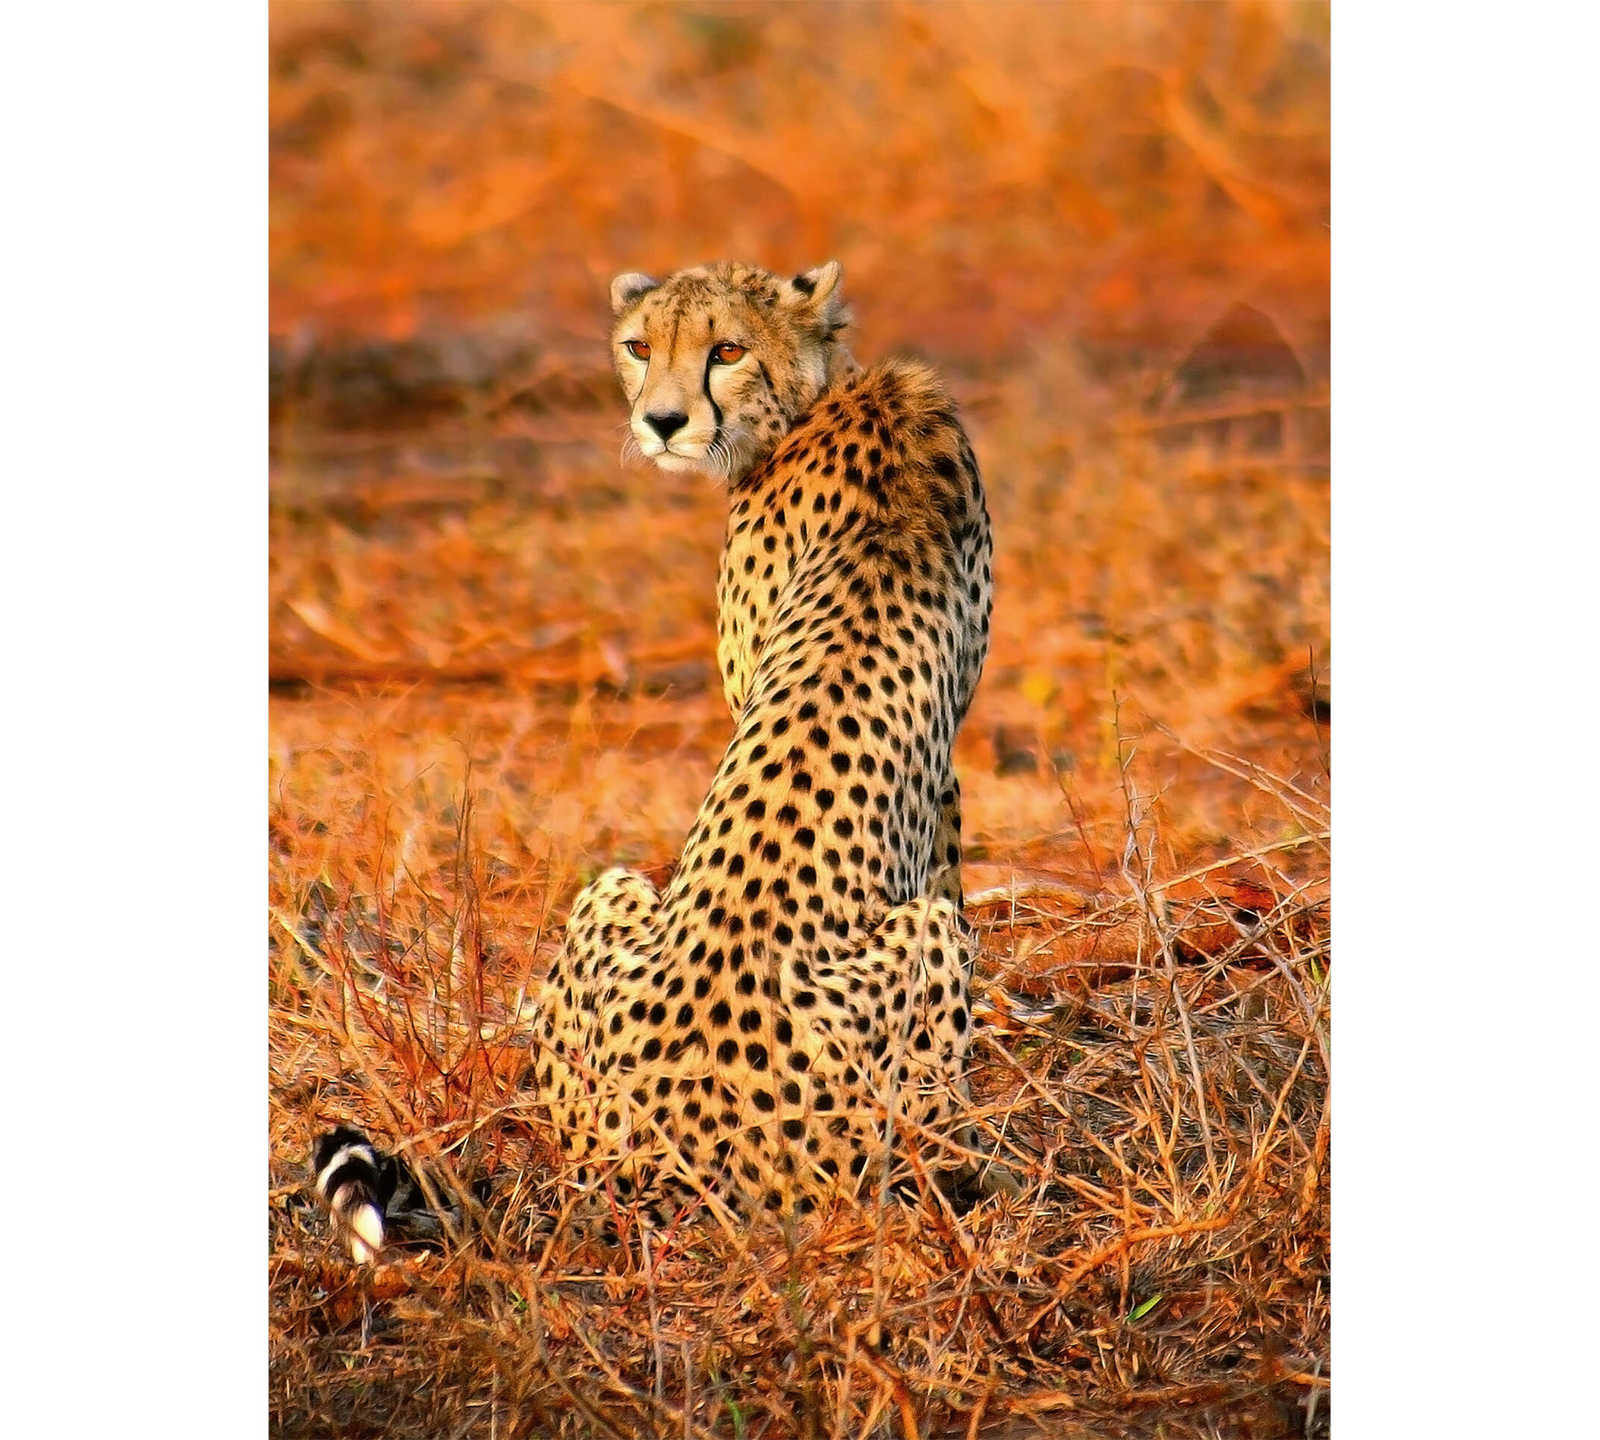         Safari mural animal leopard - yellow, orange, black
    